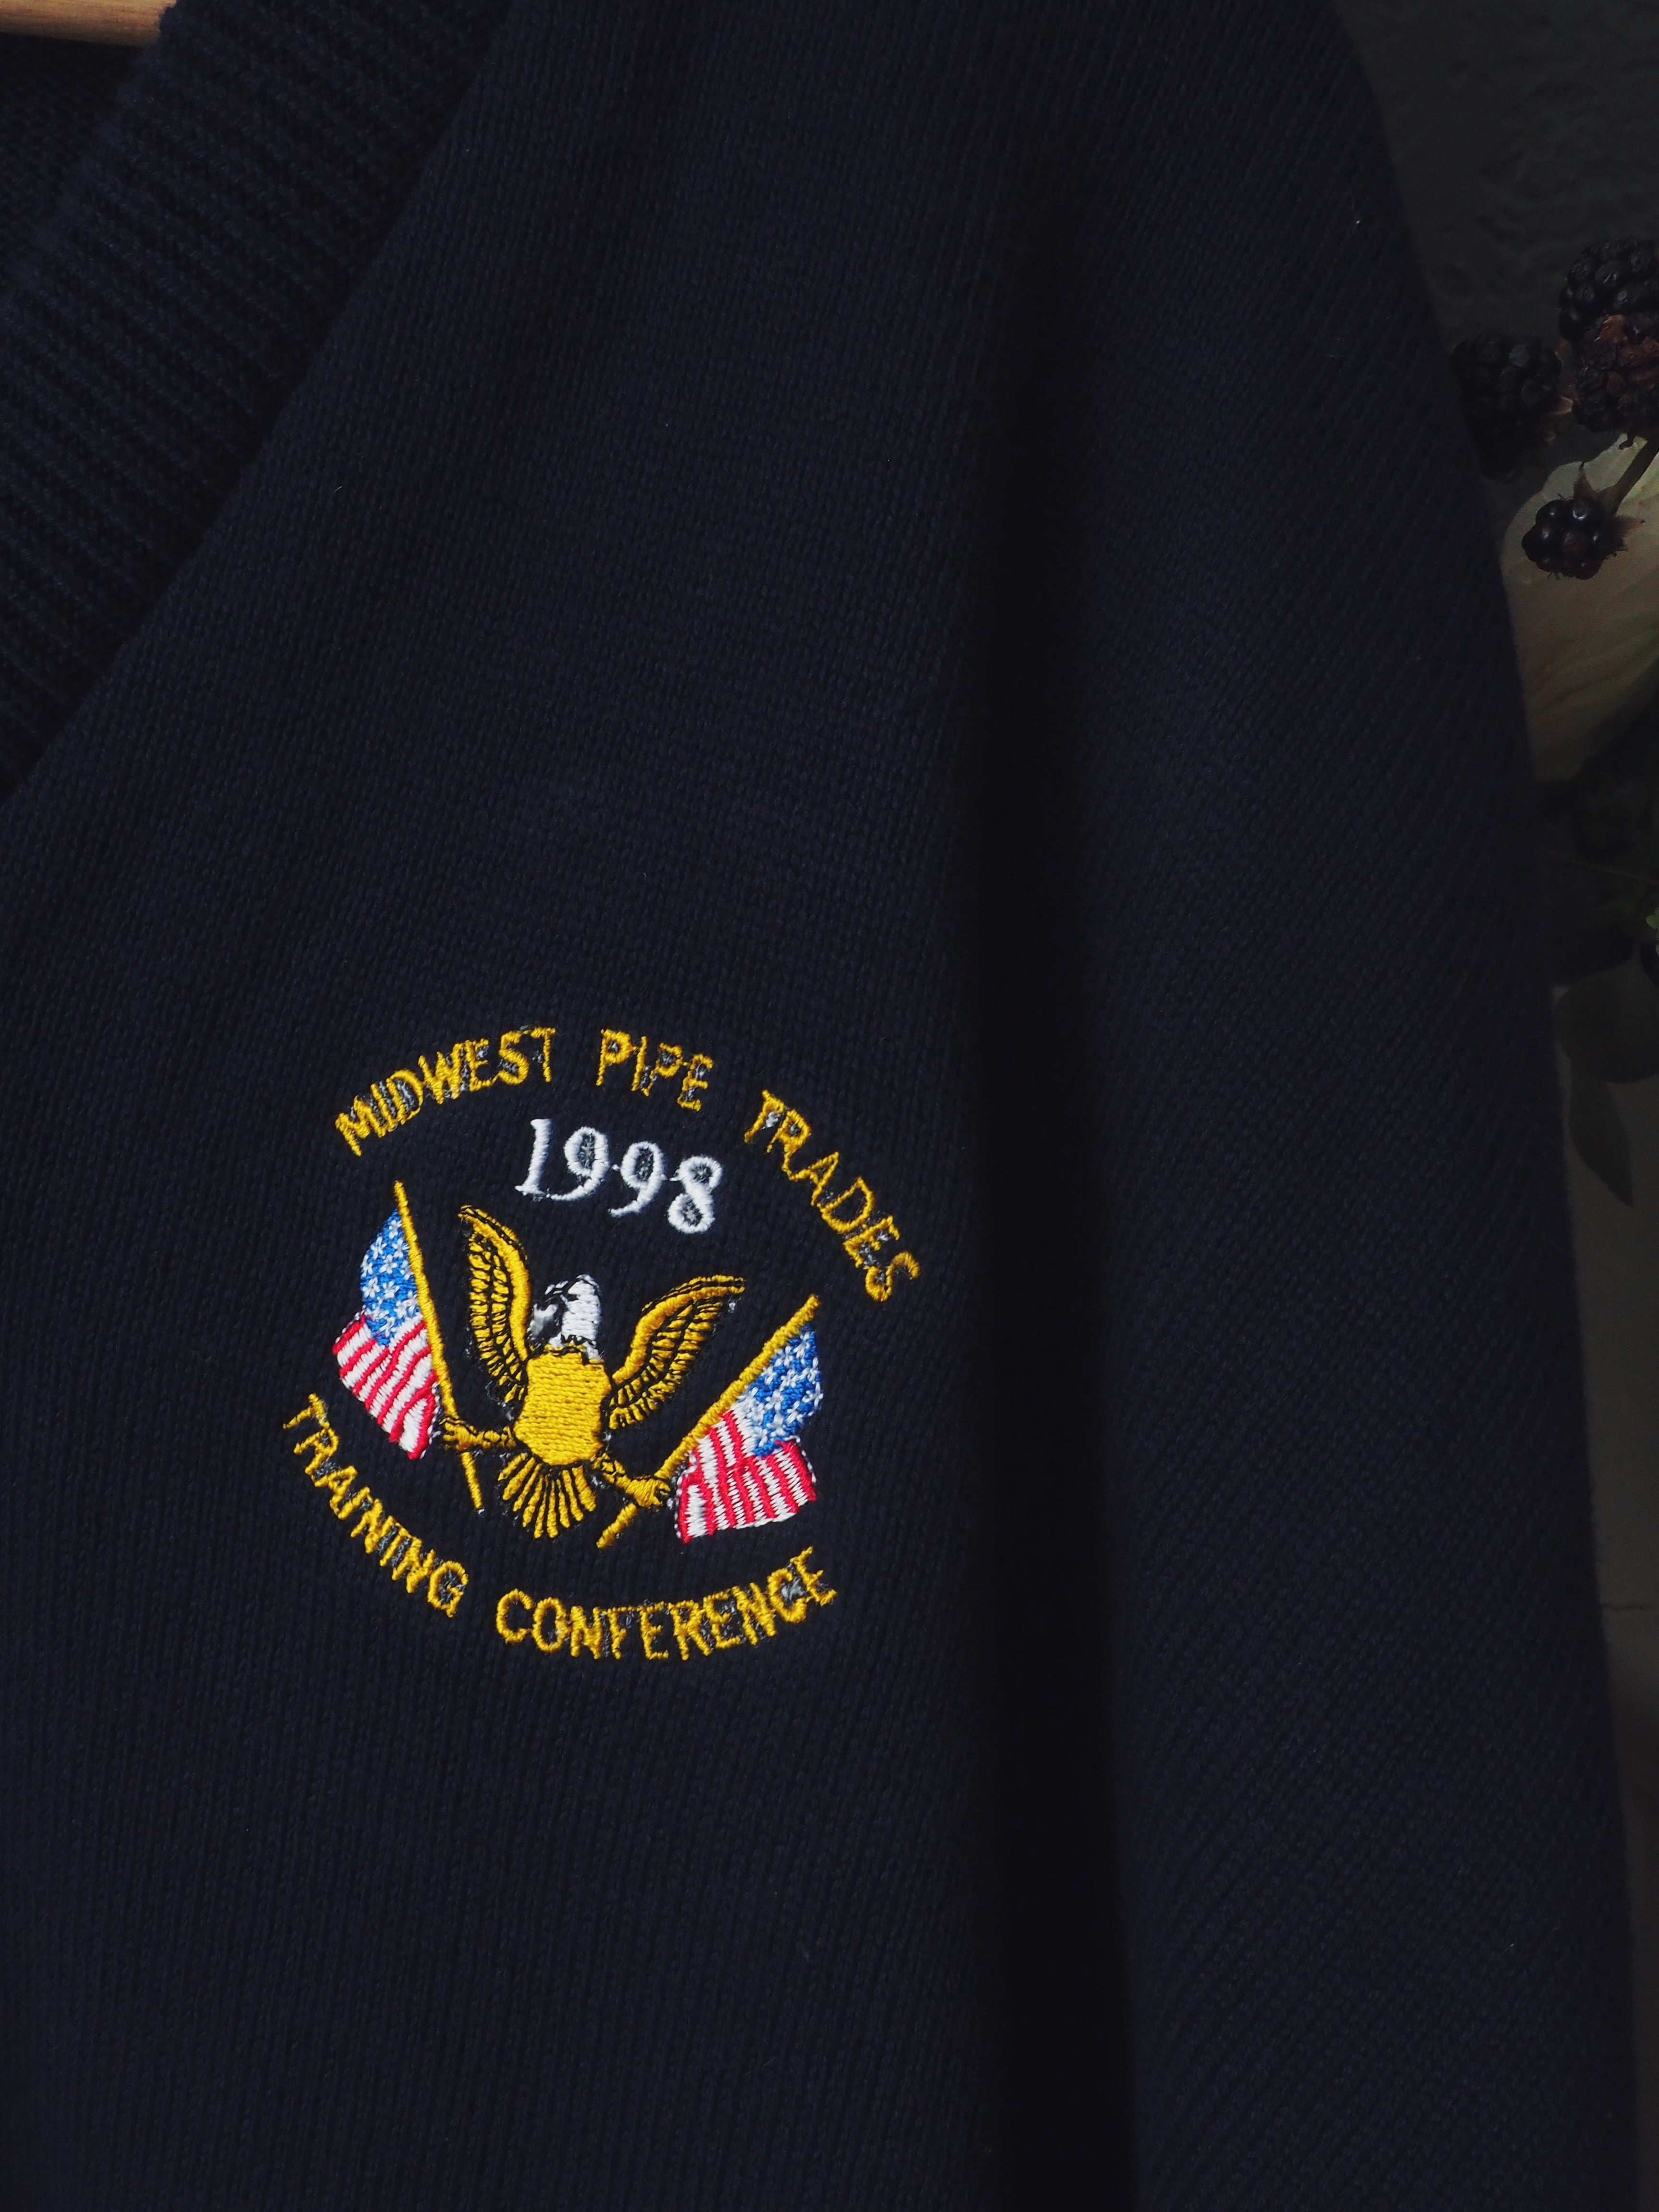 Vintage Navy Men's V-Neck Cotton Sweater